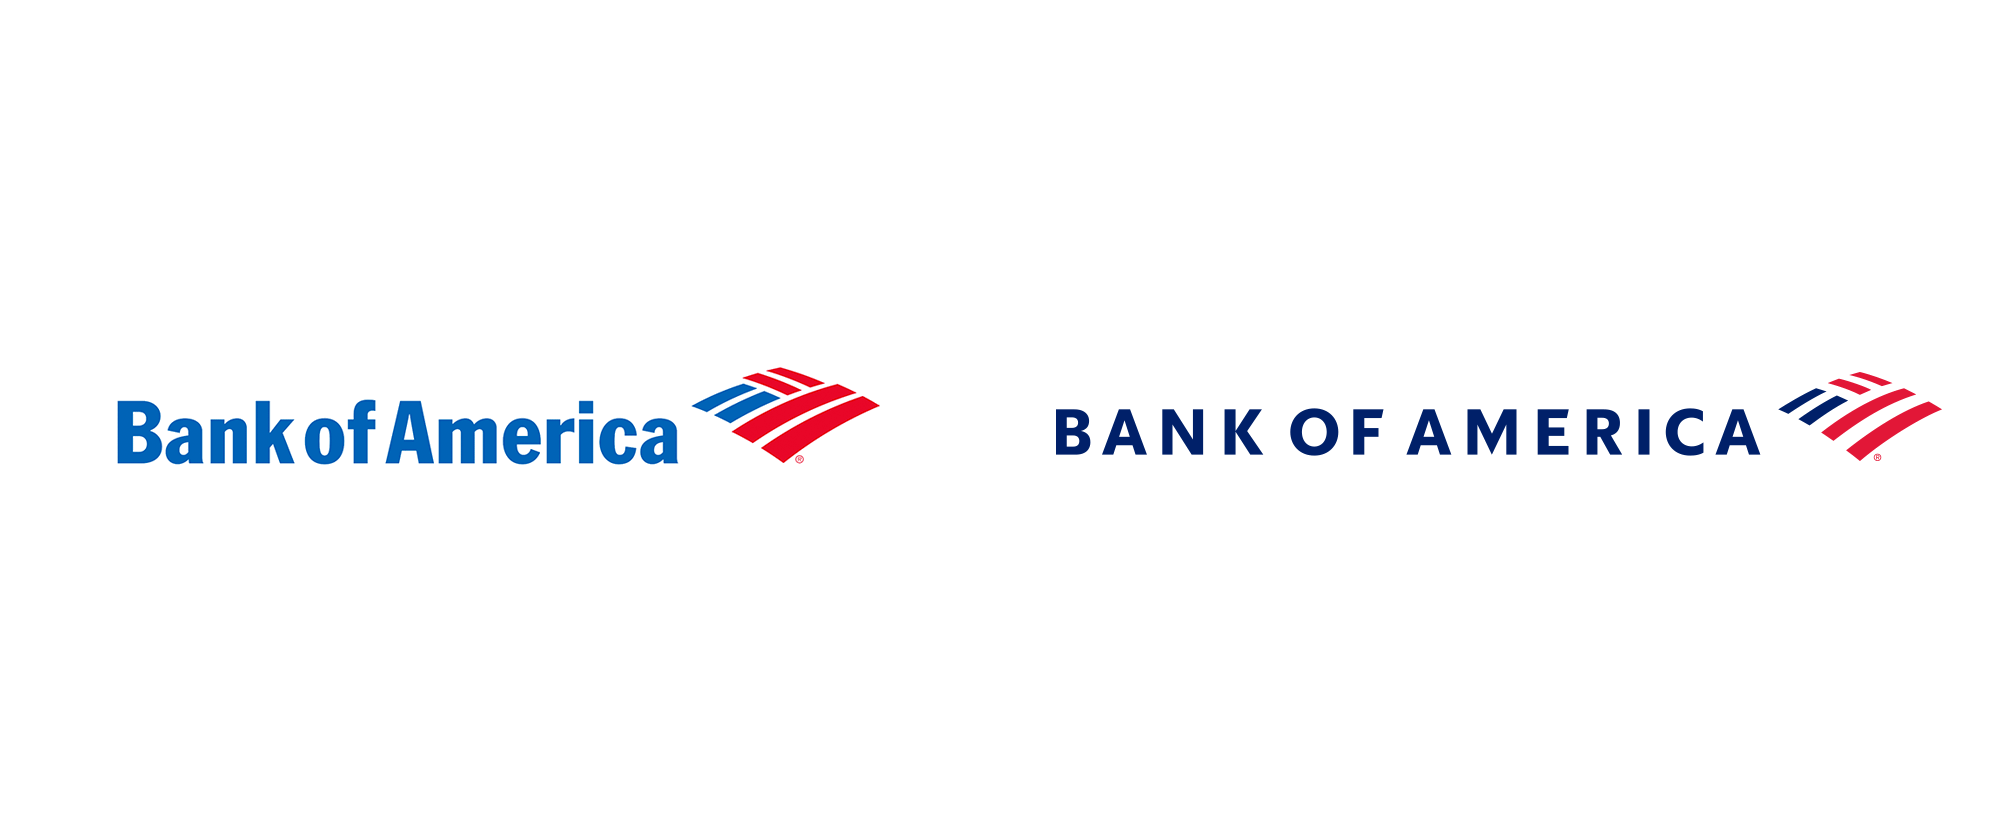 Bank of America Logos Vertical PNG Transparent Image pngteam.com